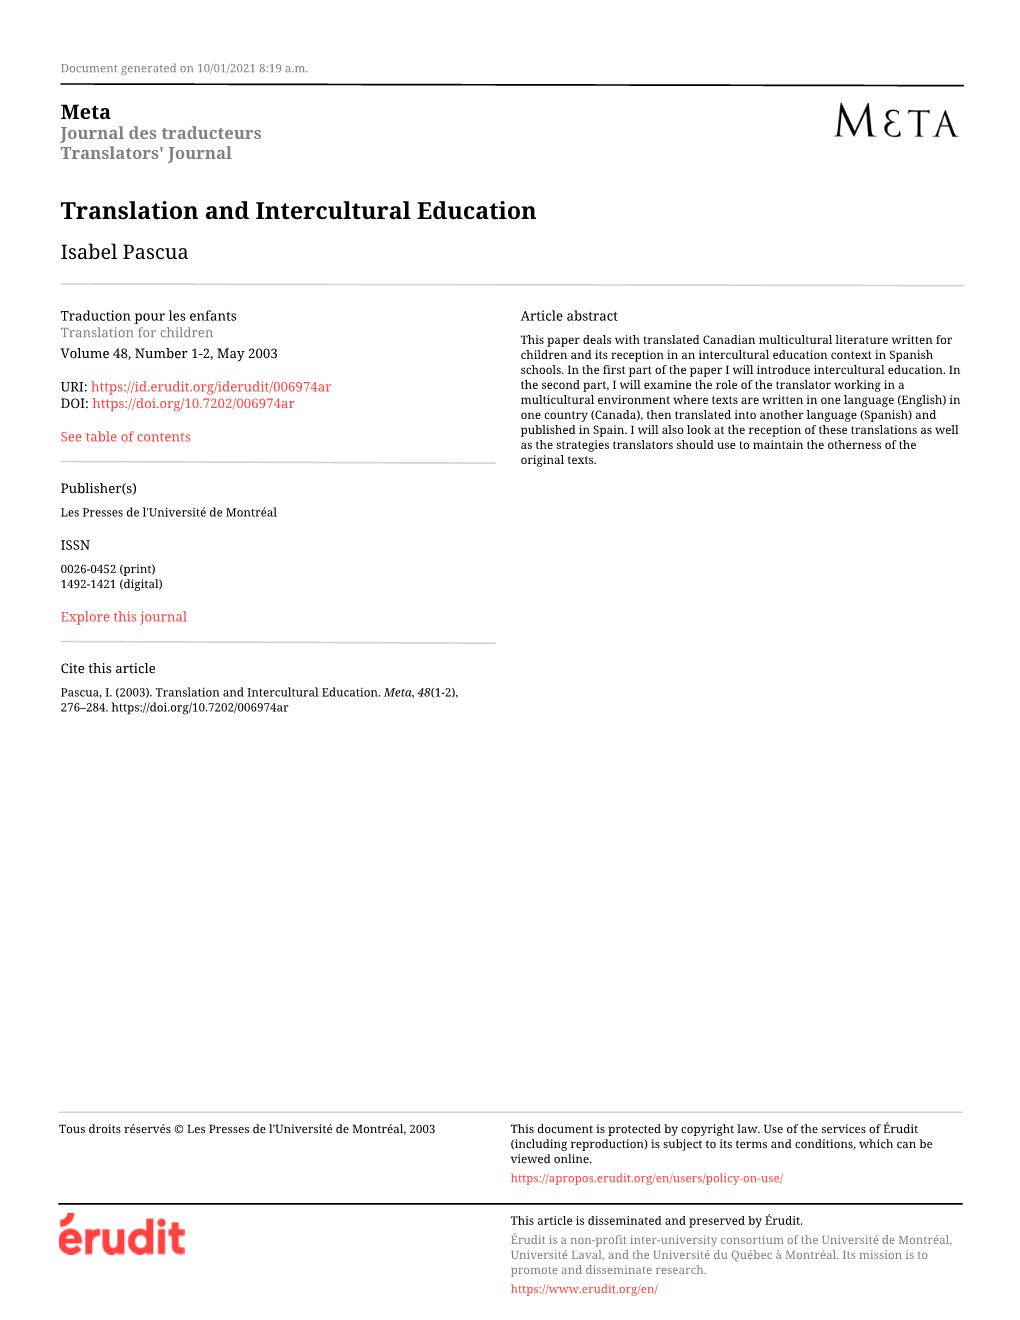 Translation and Intercultural Education Isabel Pascua